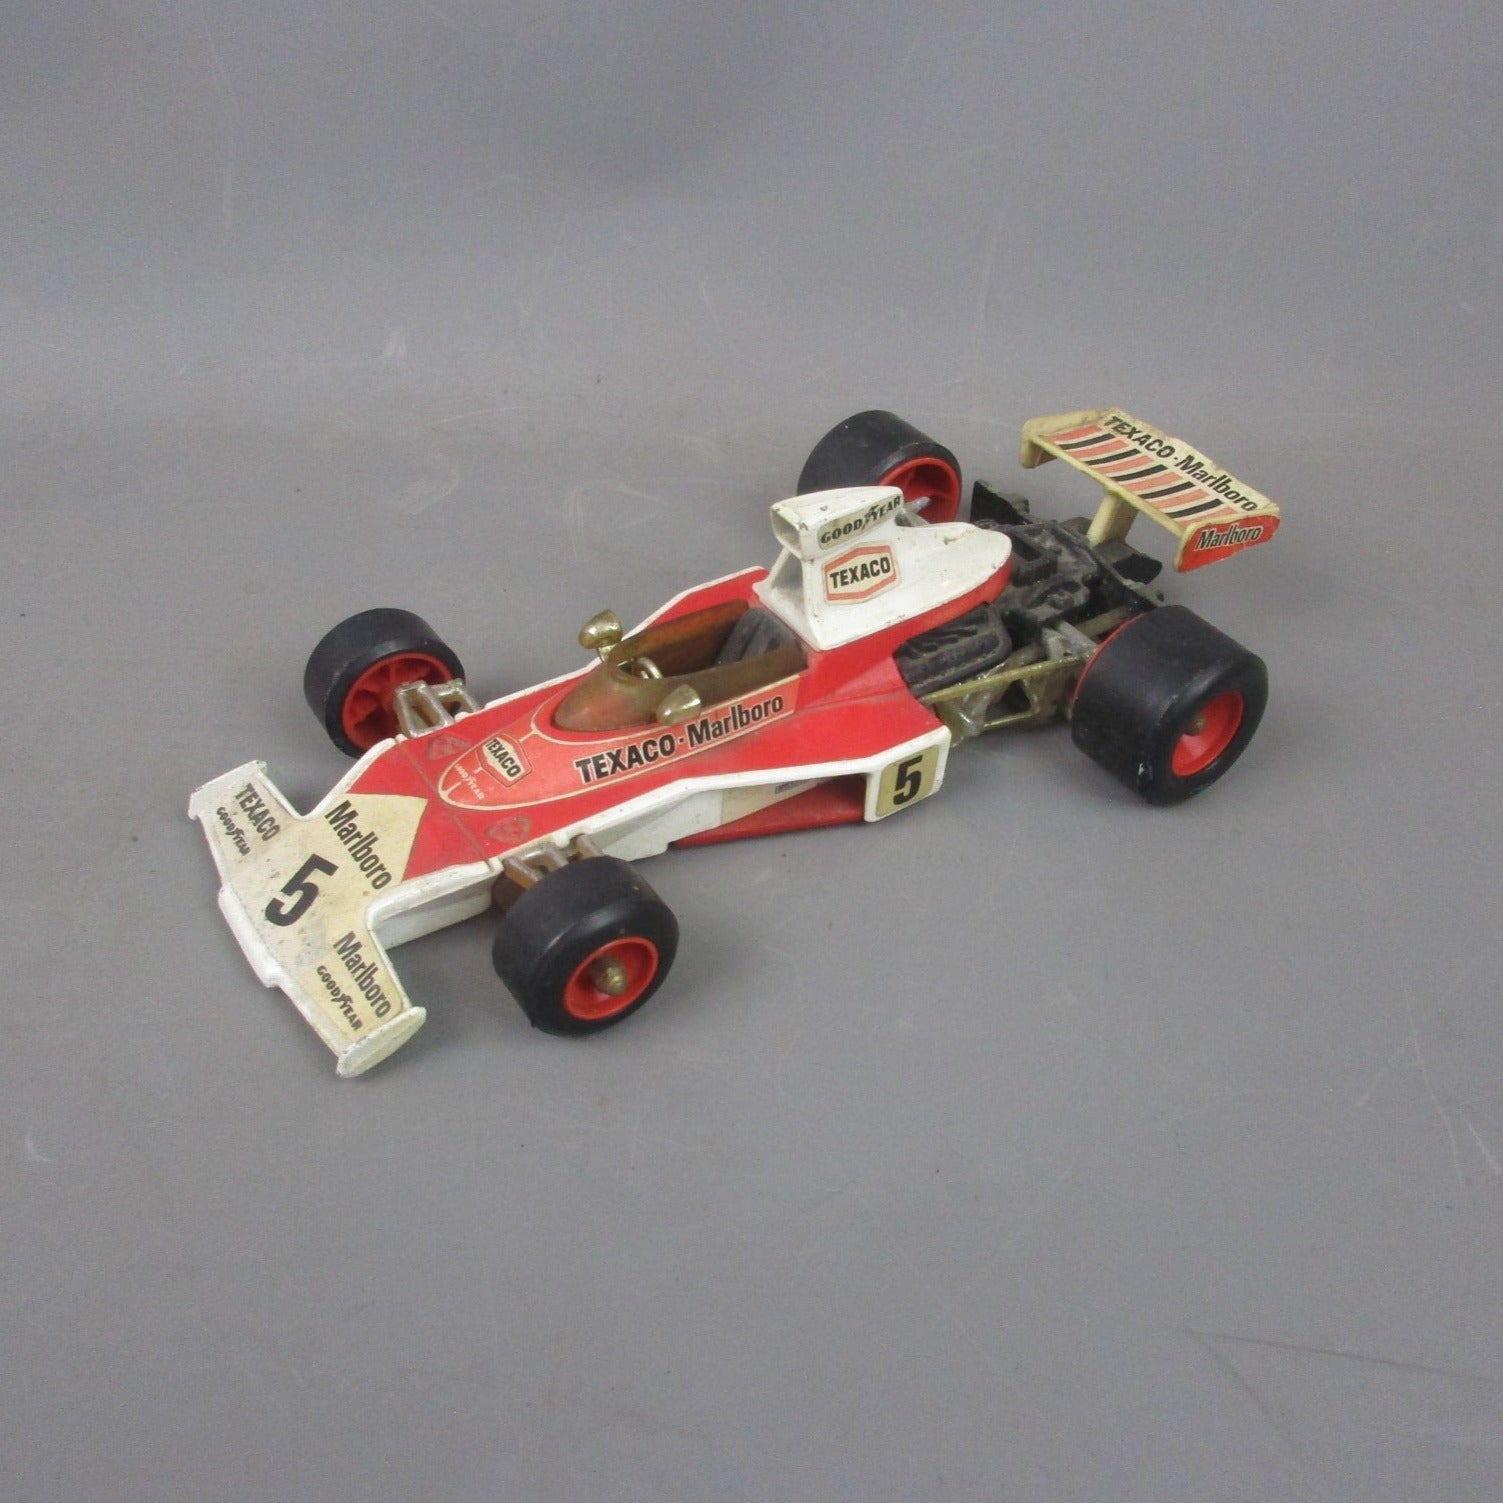 Corgi Toys Mclaren M23B Formula One Racing Car Toy Vintage c1980